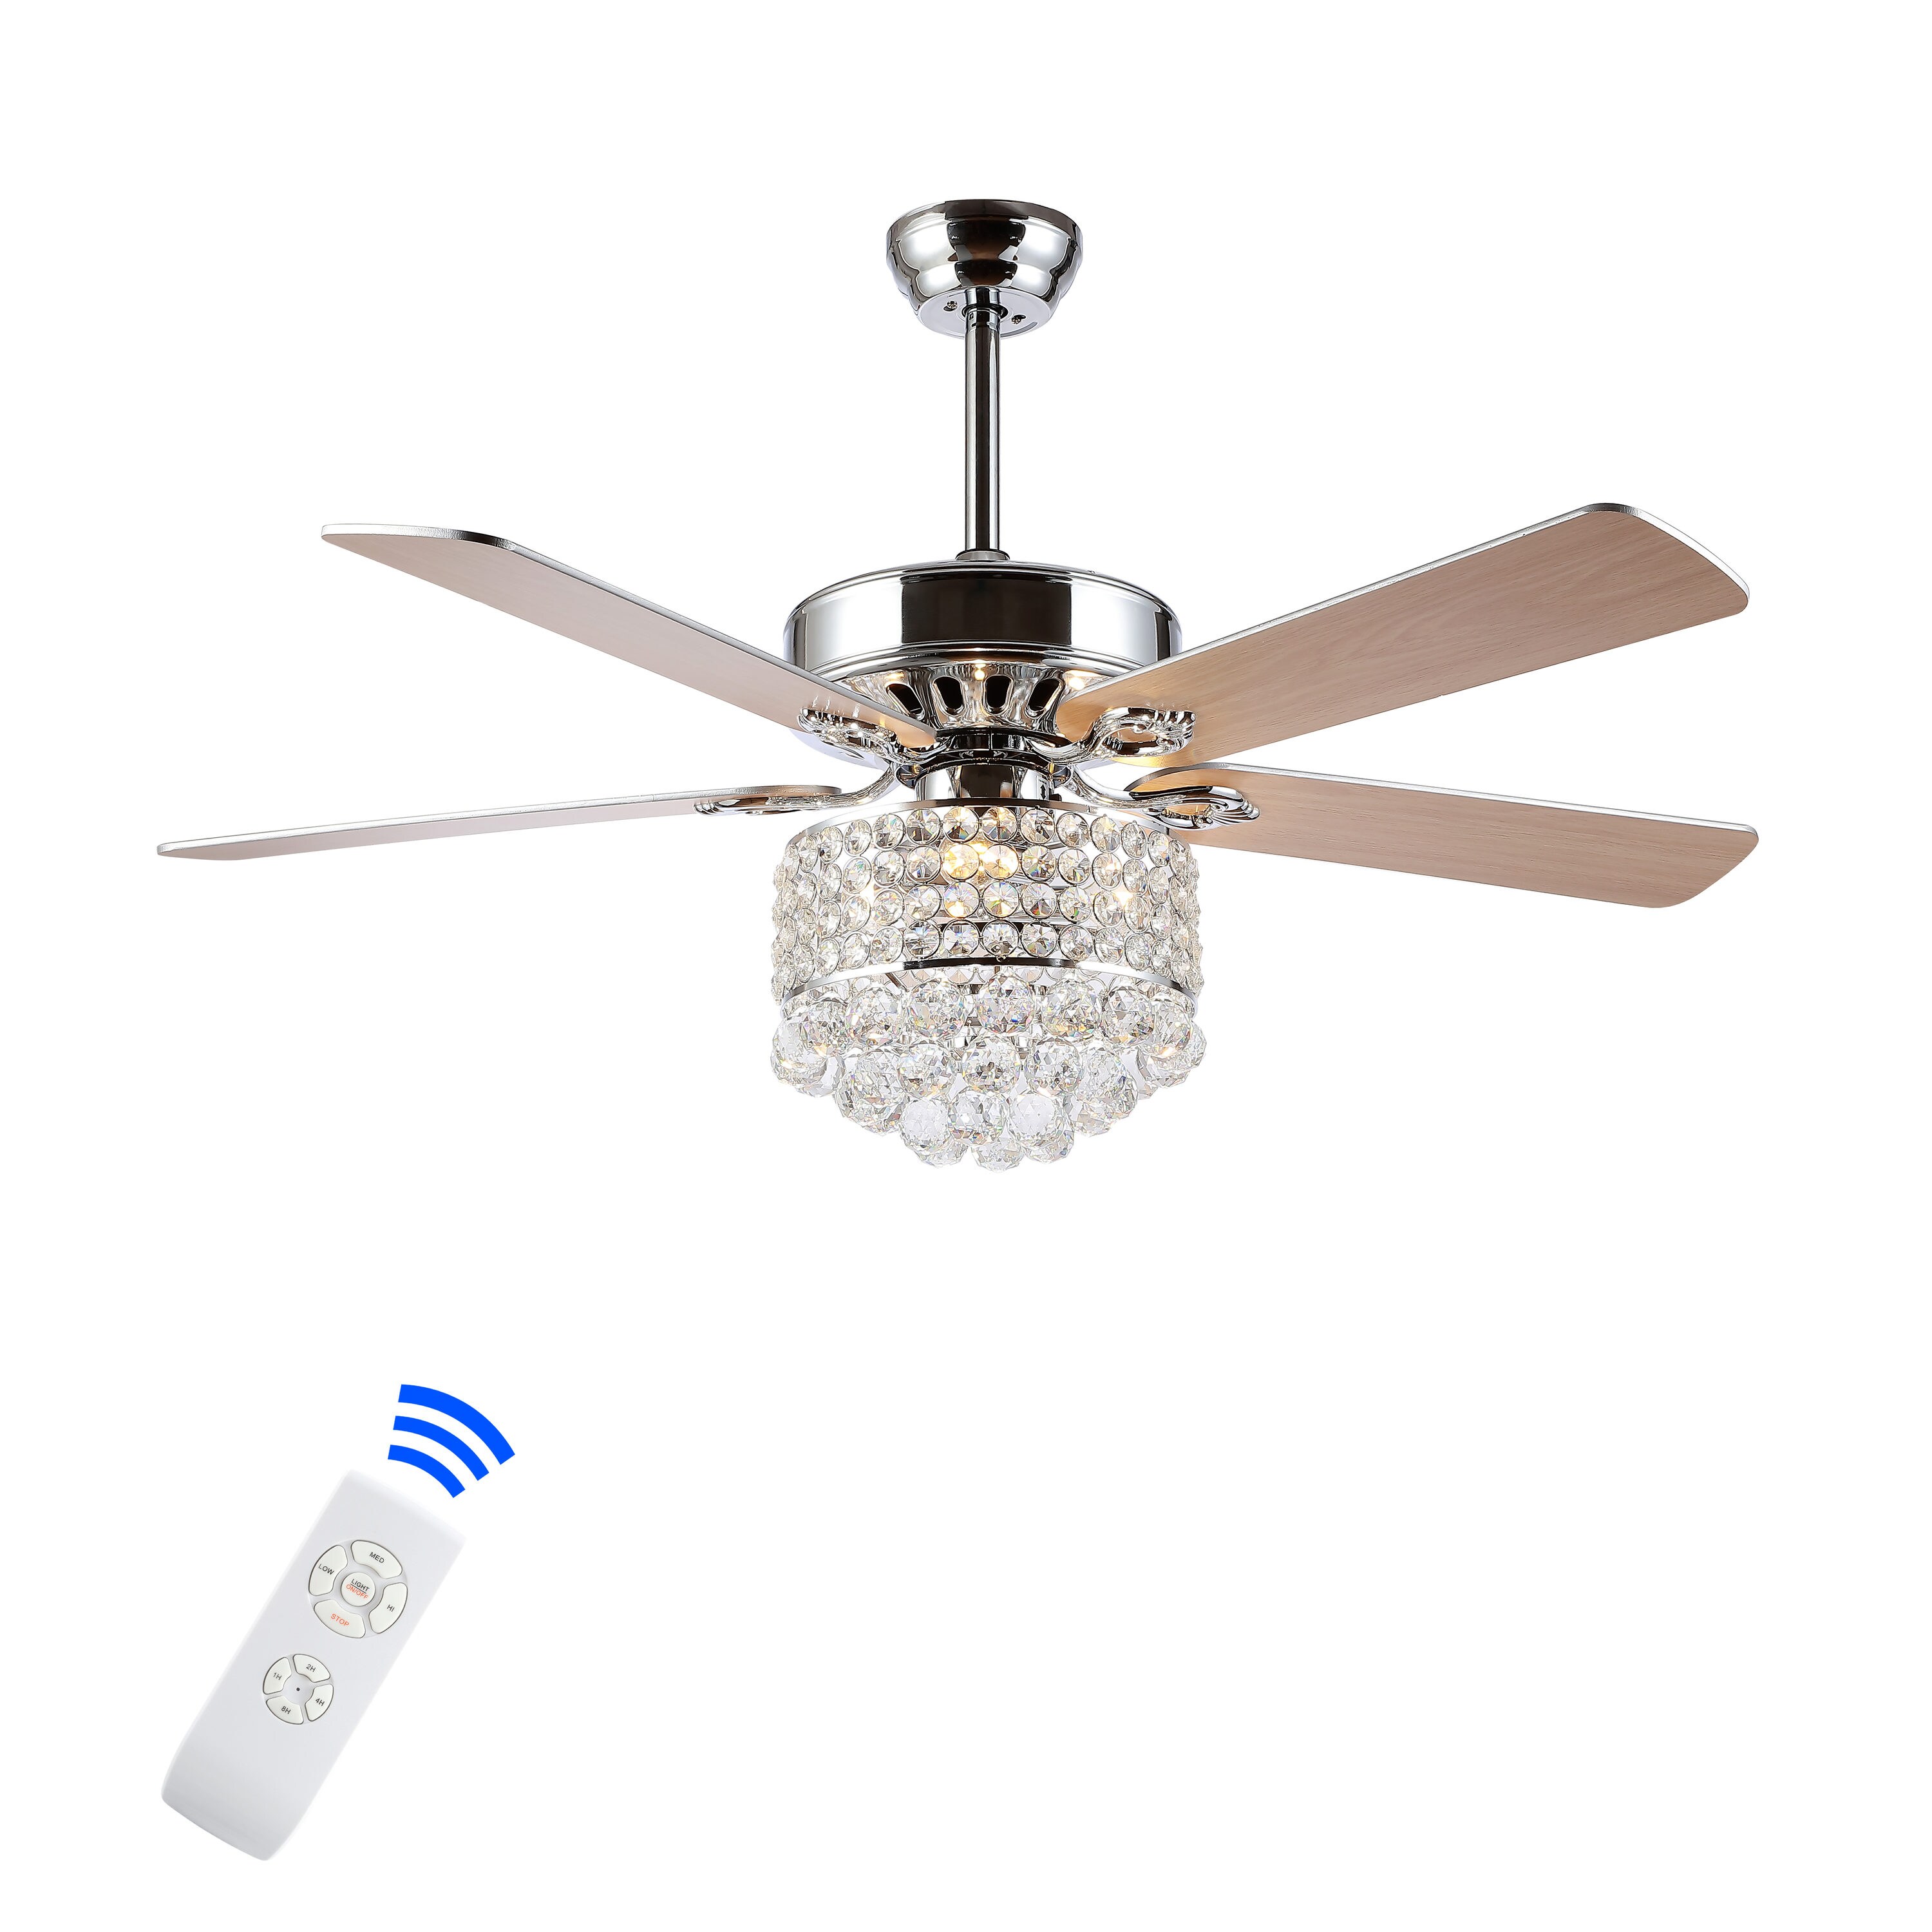 NIB SAFAVIEH Lighting 52" Dresher Ceiling Fan w/ Light Remote CLF1006A FREE sH 